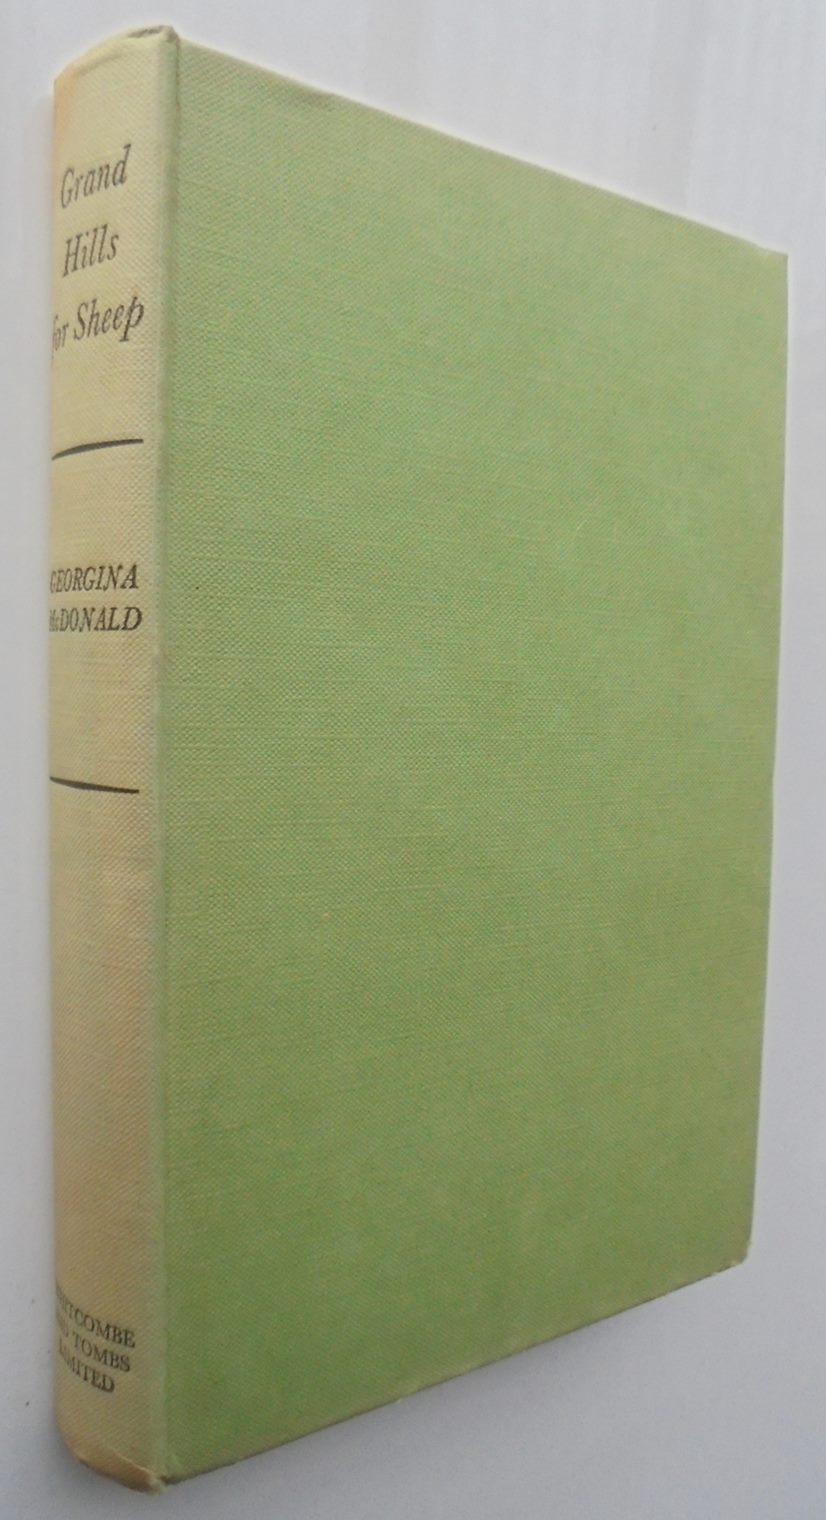 Grand Hills for Sheep - Georgina McDonald (1949 2nd edition)